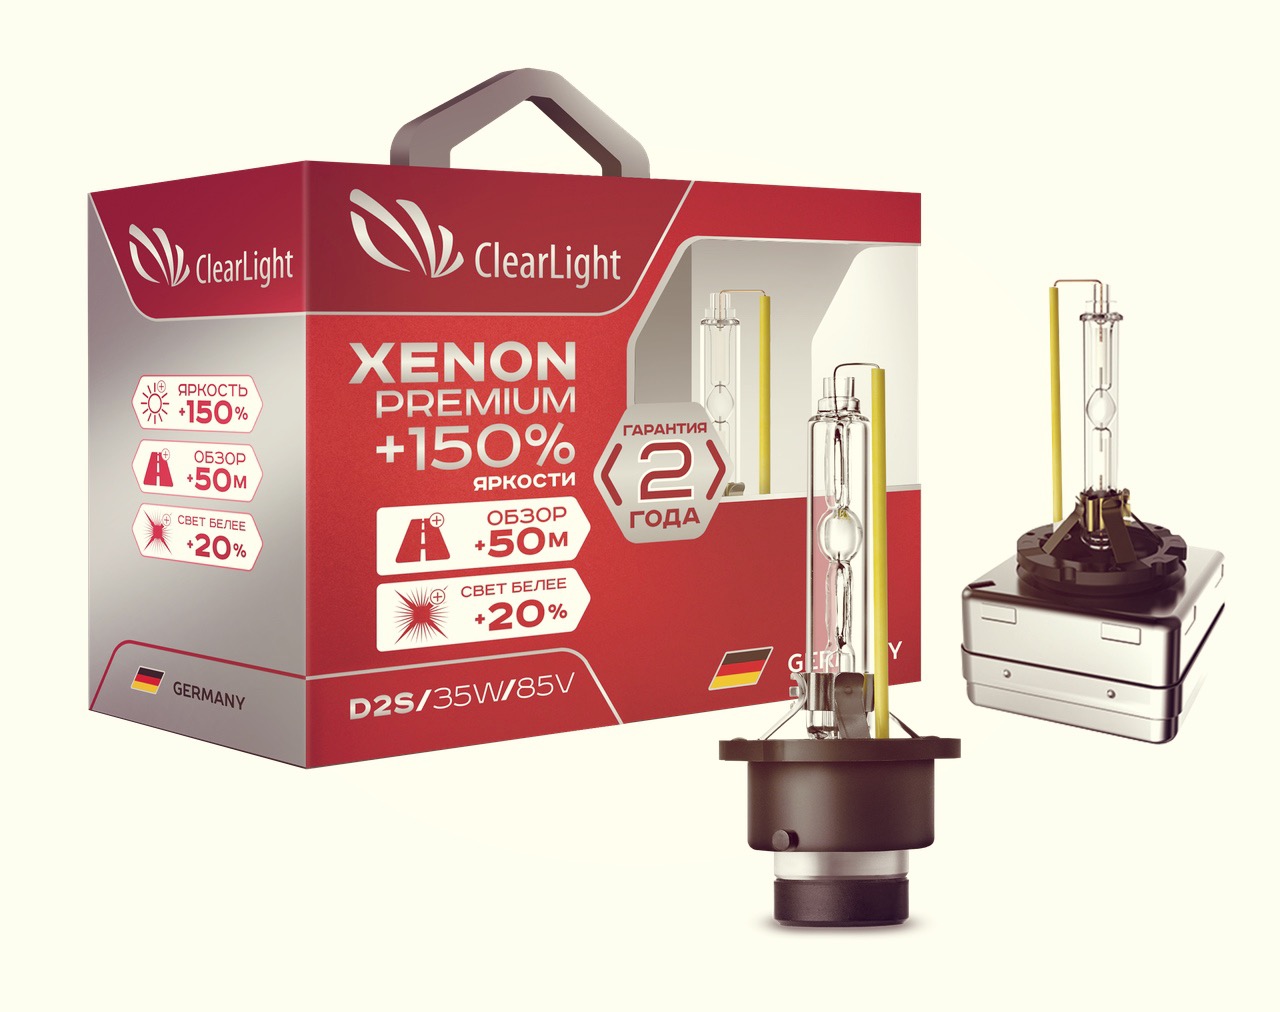 CLEAR LIGHT XENON PREMIUM +150%